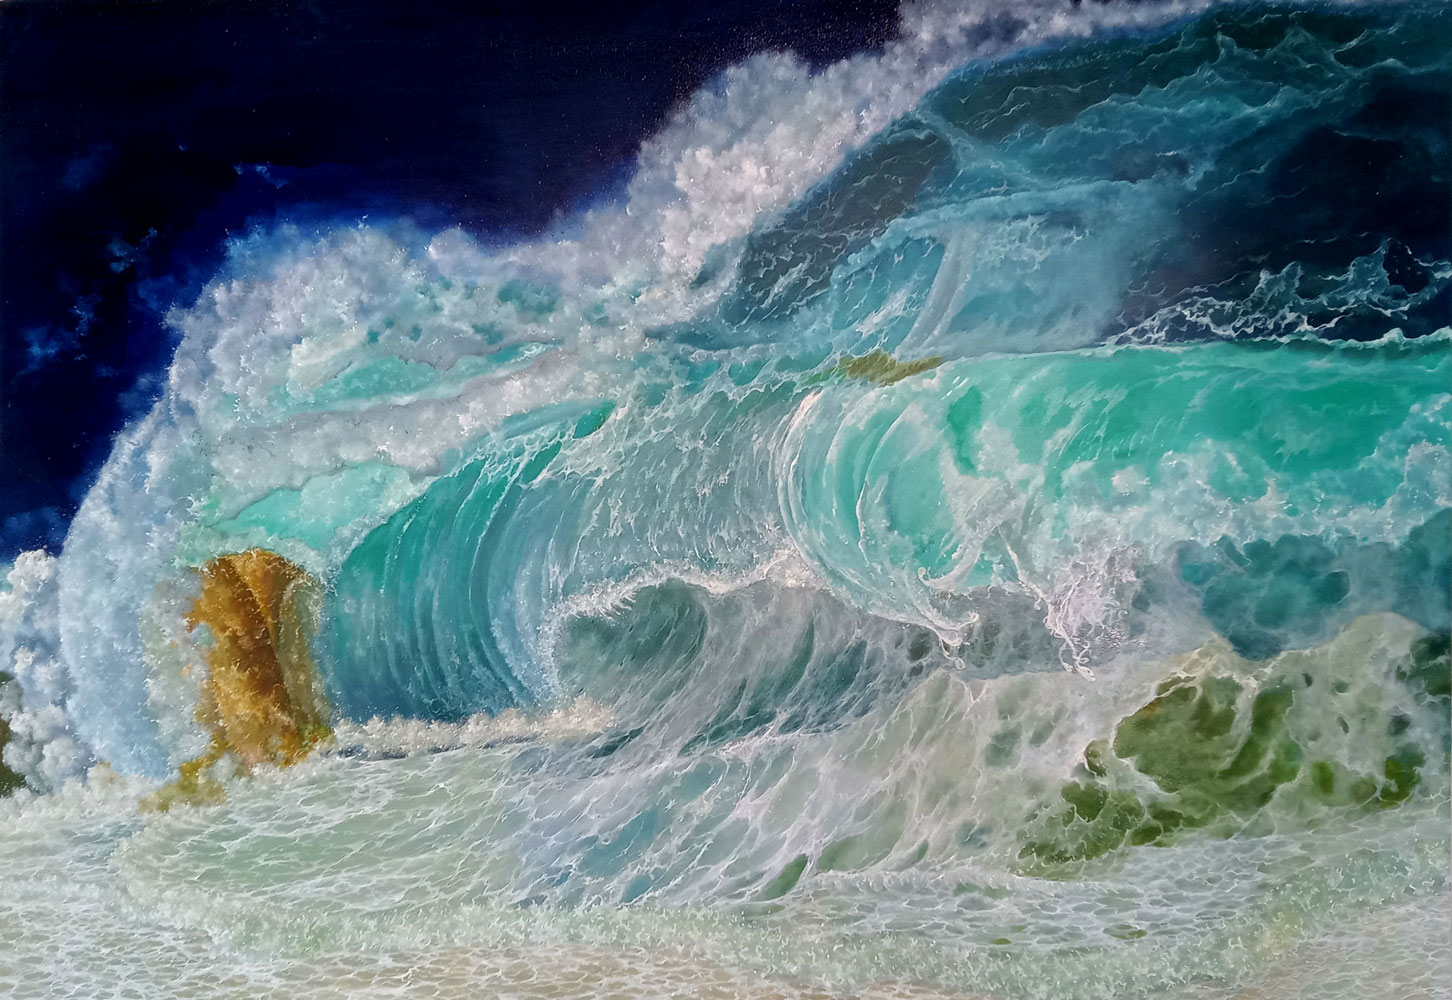 Realism Painting with Oil on Canvas "Wave" art by Kaustav Jyoti Dasgupta